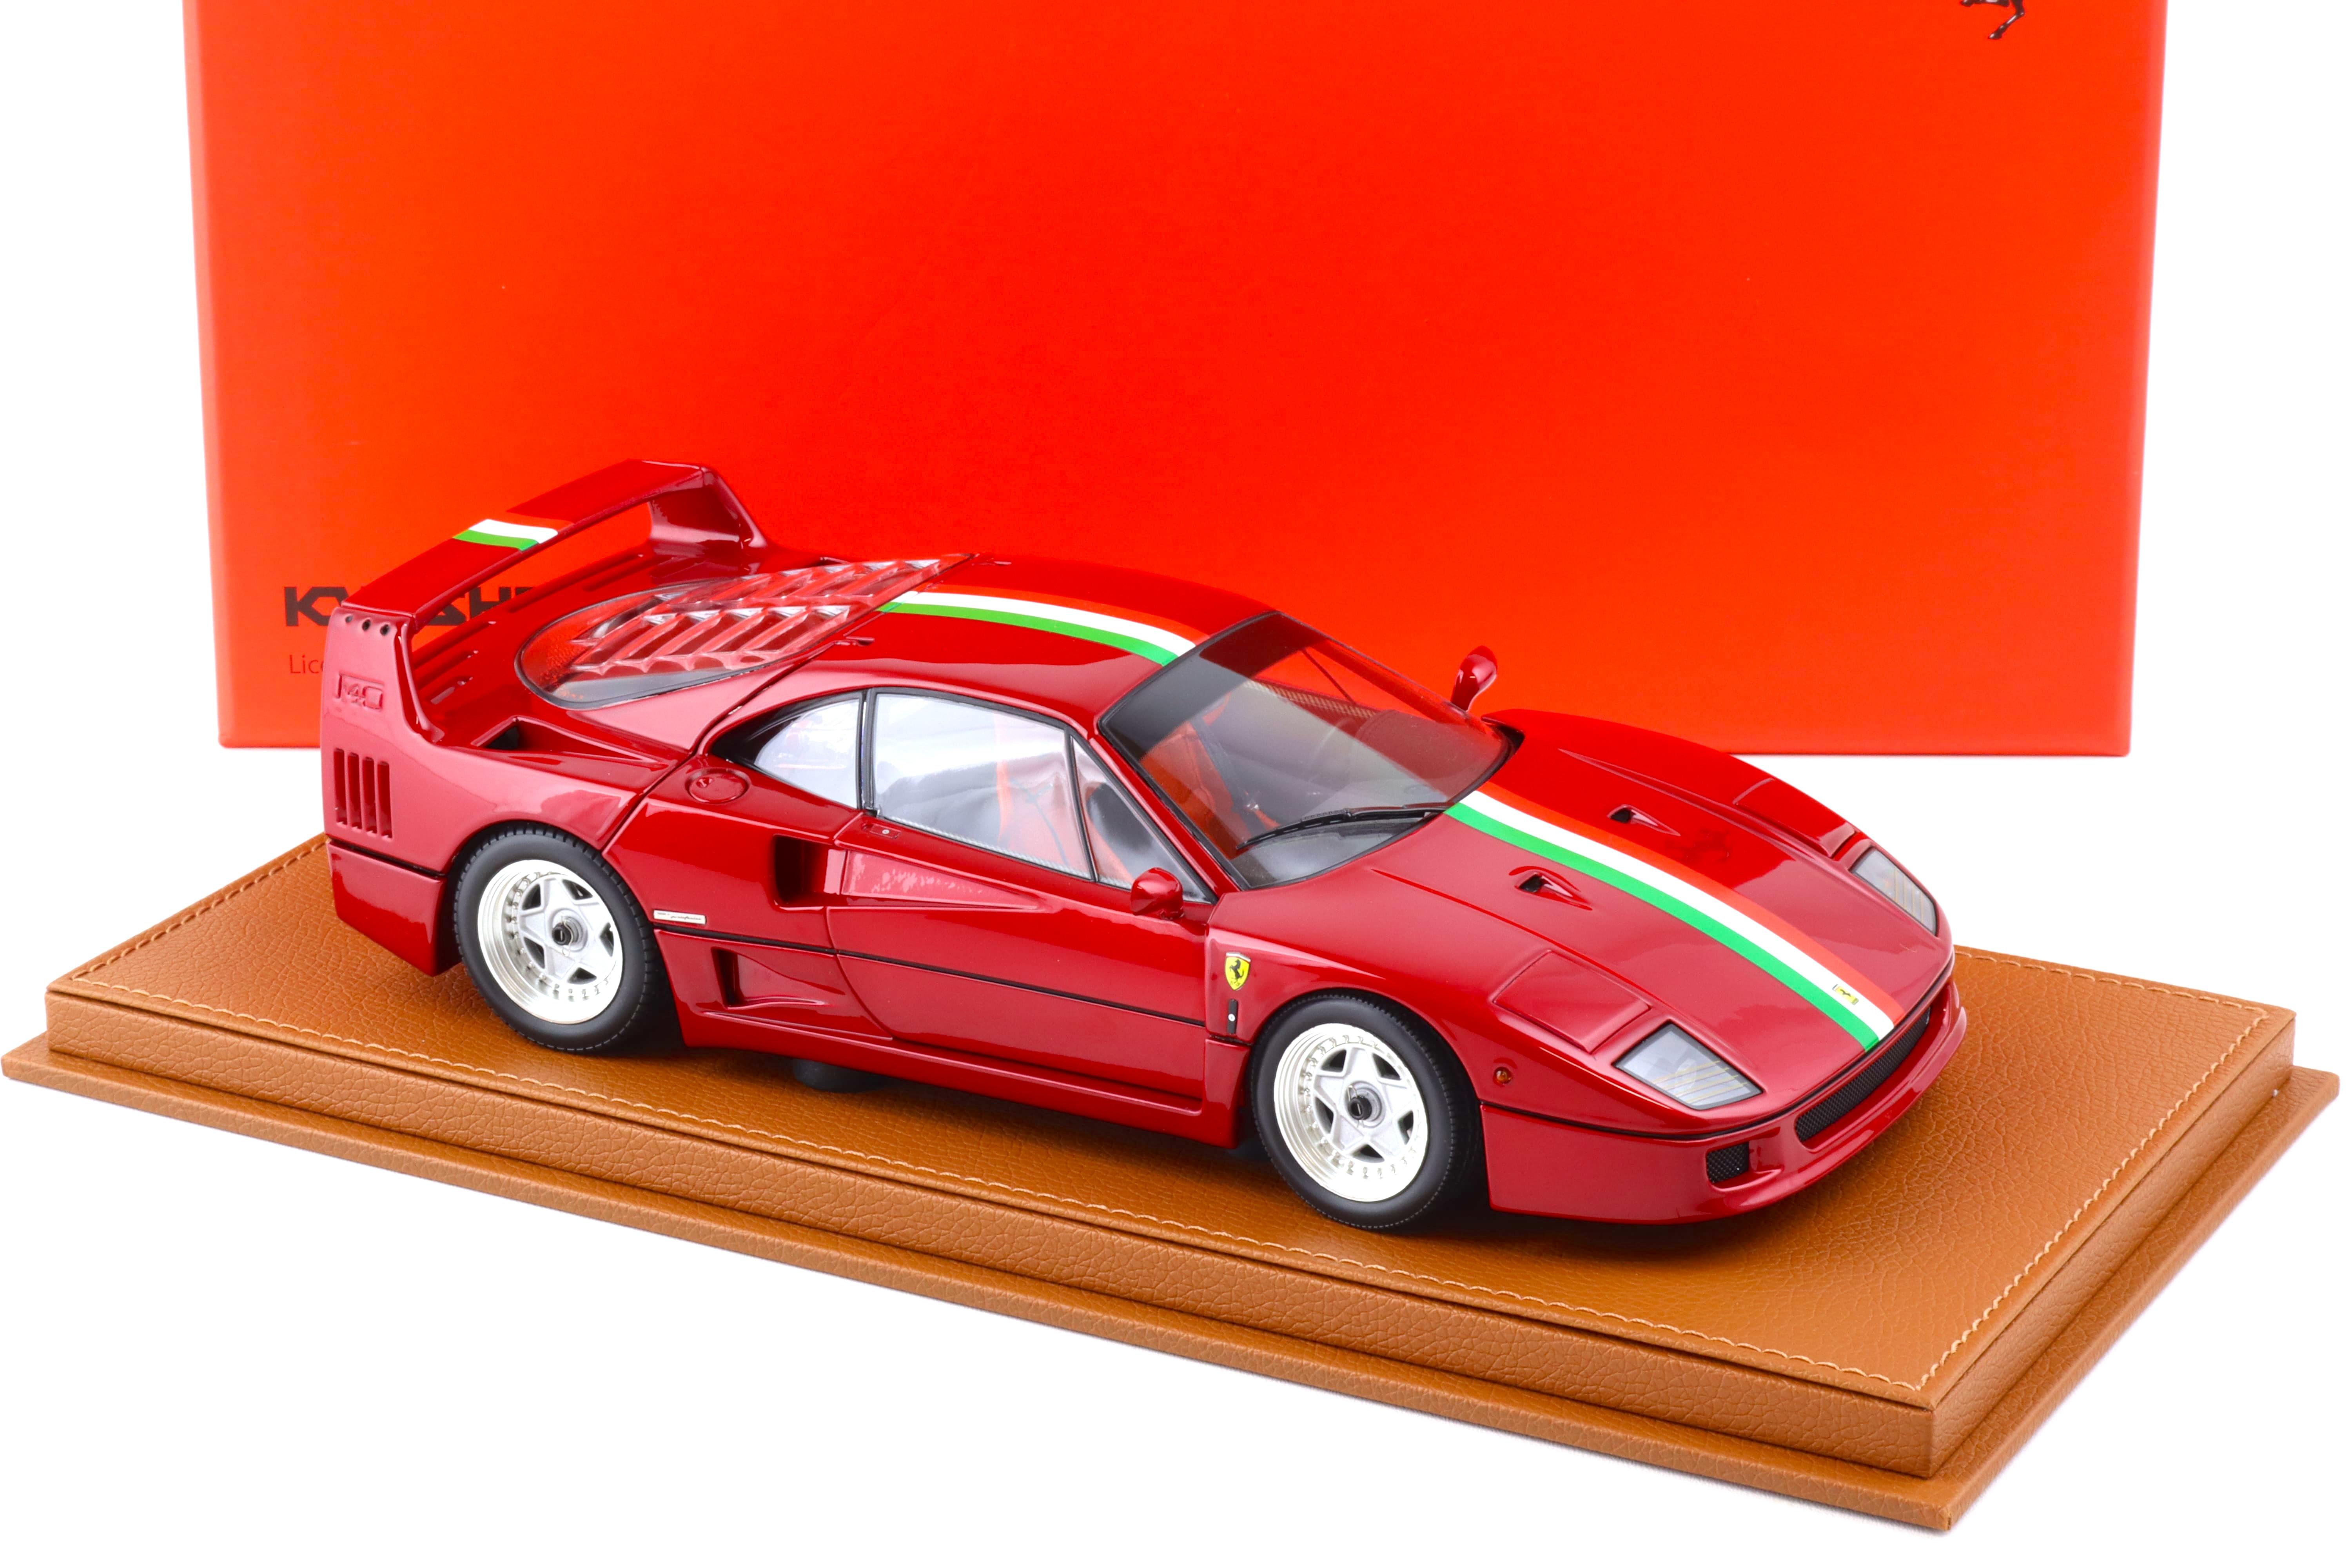 1:18 BBR Kyosho Ferrari F40 metallic red/ Italian Flag with Showcase - Limited 78 pcs.